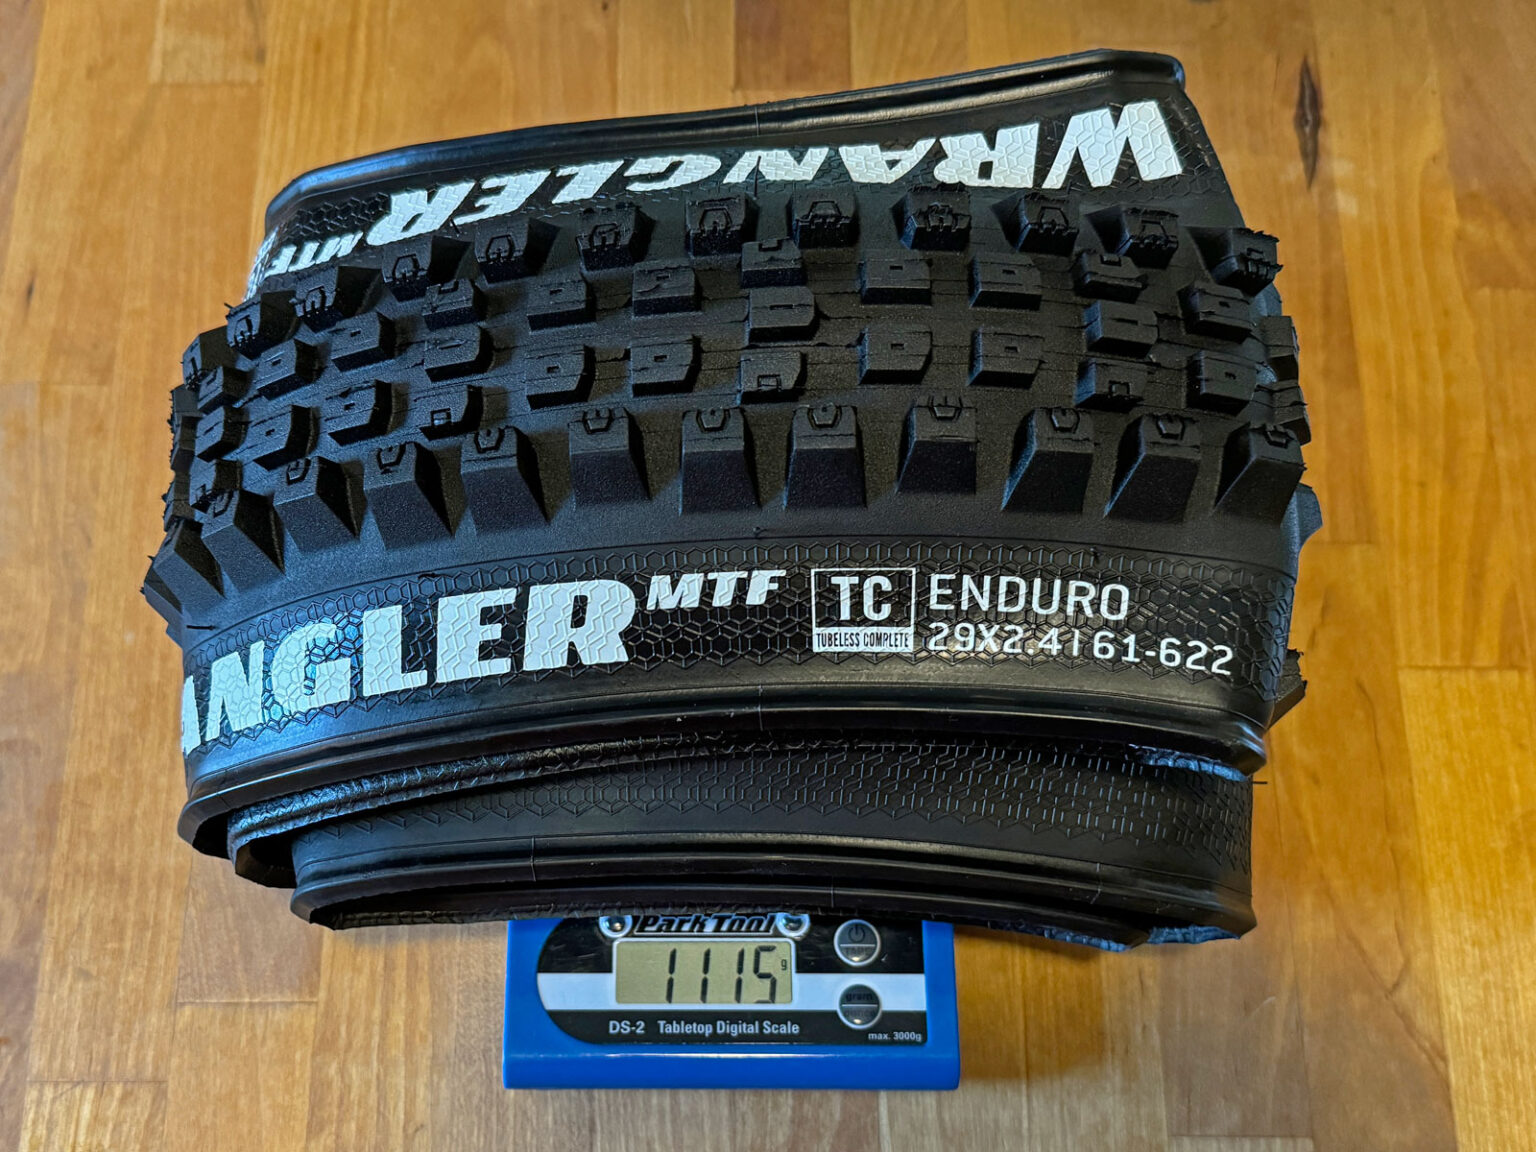 Goodyear Wrangler enduro mountain bike tires, 1115g actual weight 29x2.4" front